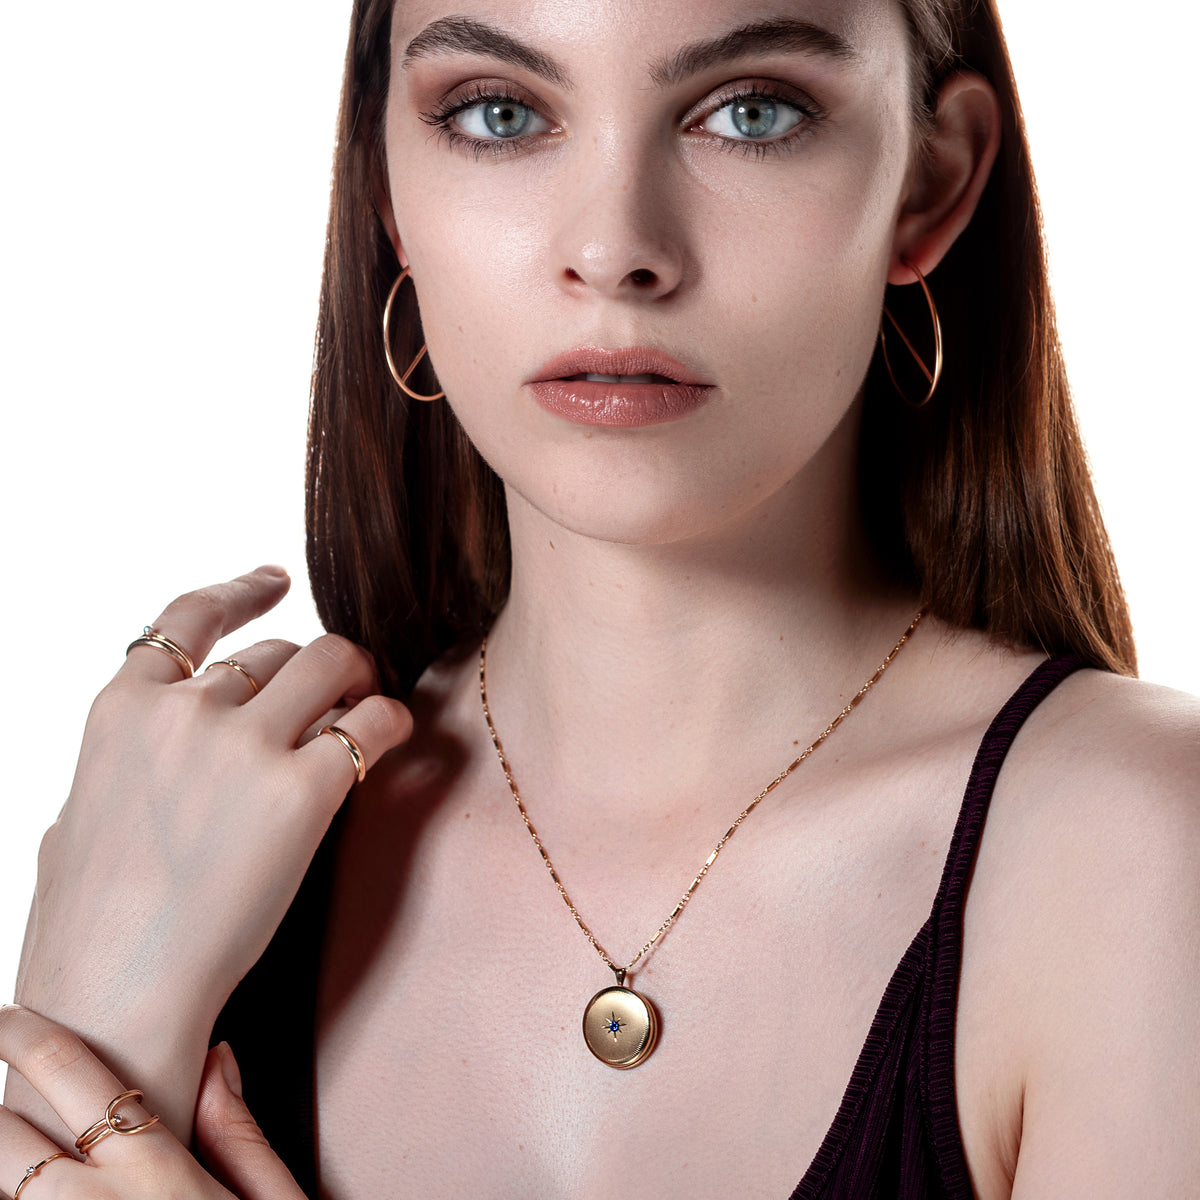 birthstone locket necklace by glamrocks jewelry on model